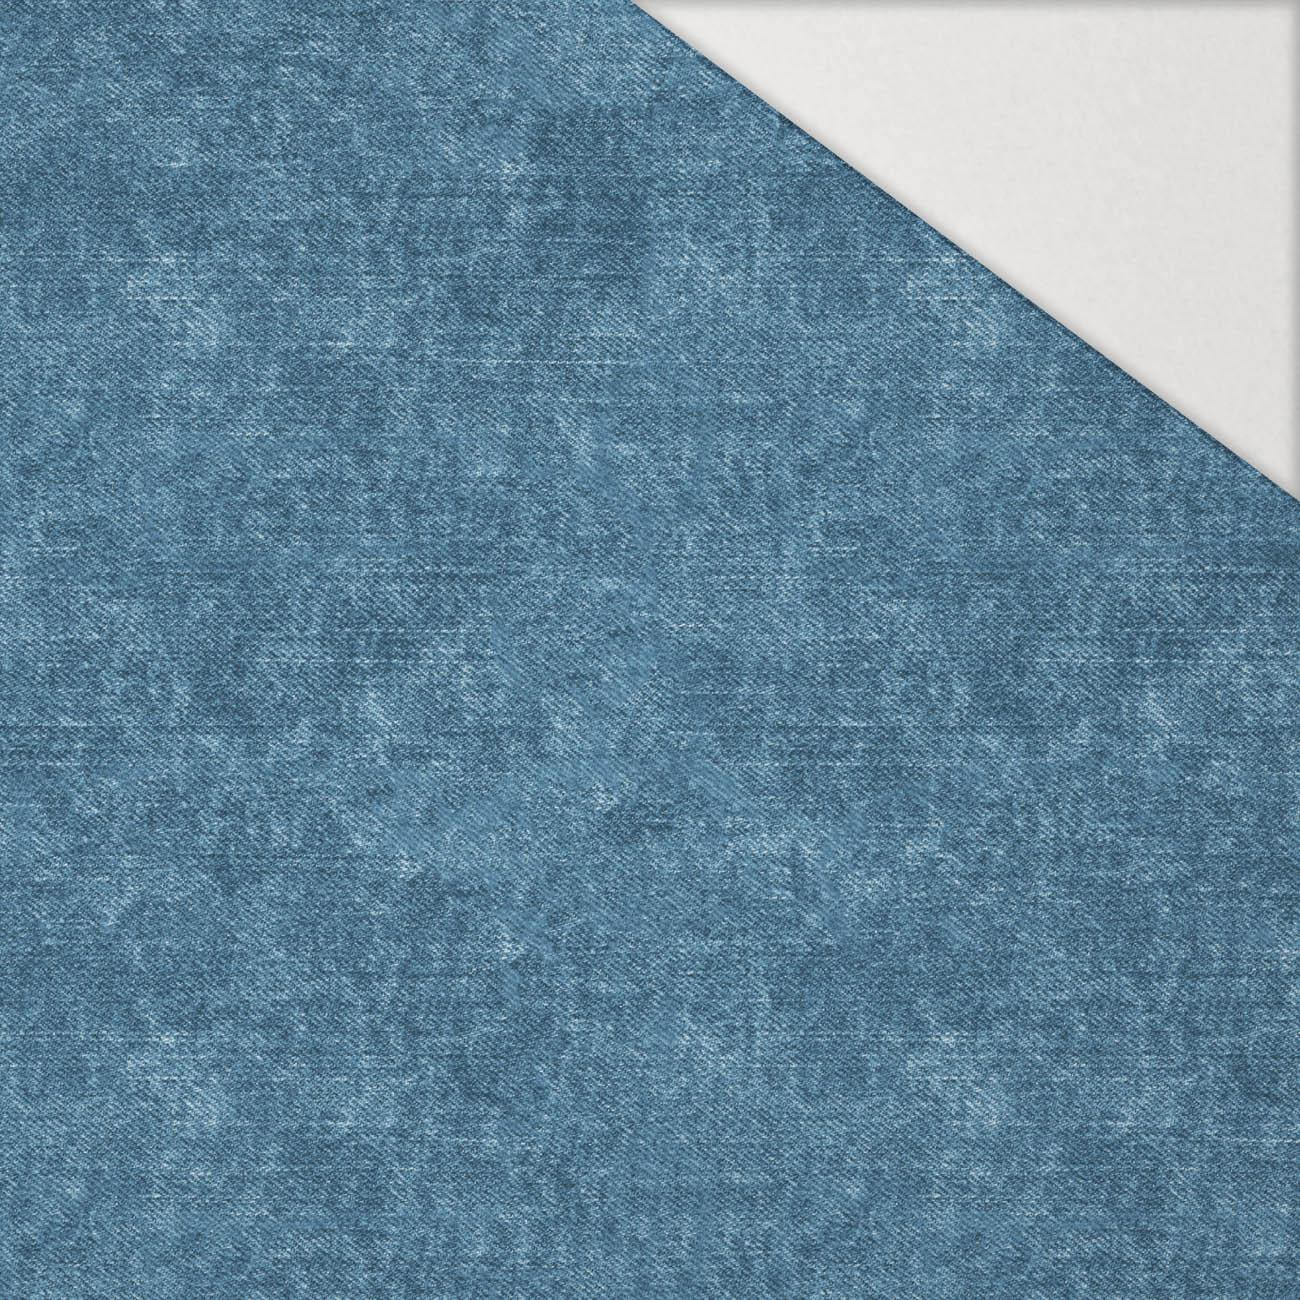 ACID WASH / ATLANTIC BLUE - Hydrophobic brushed knit